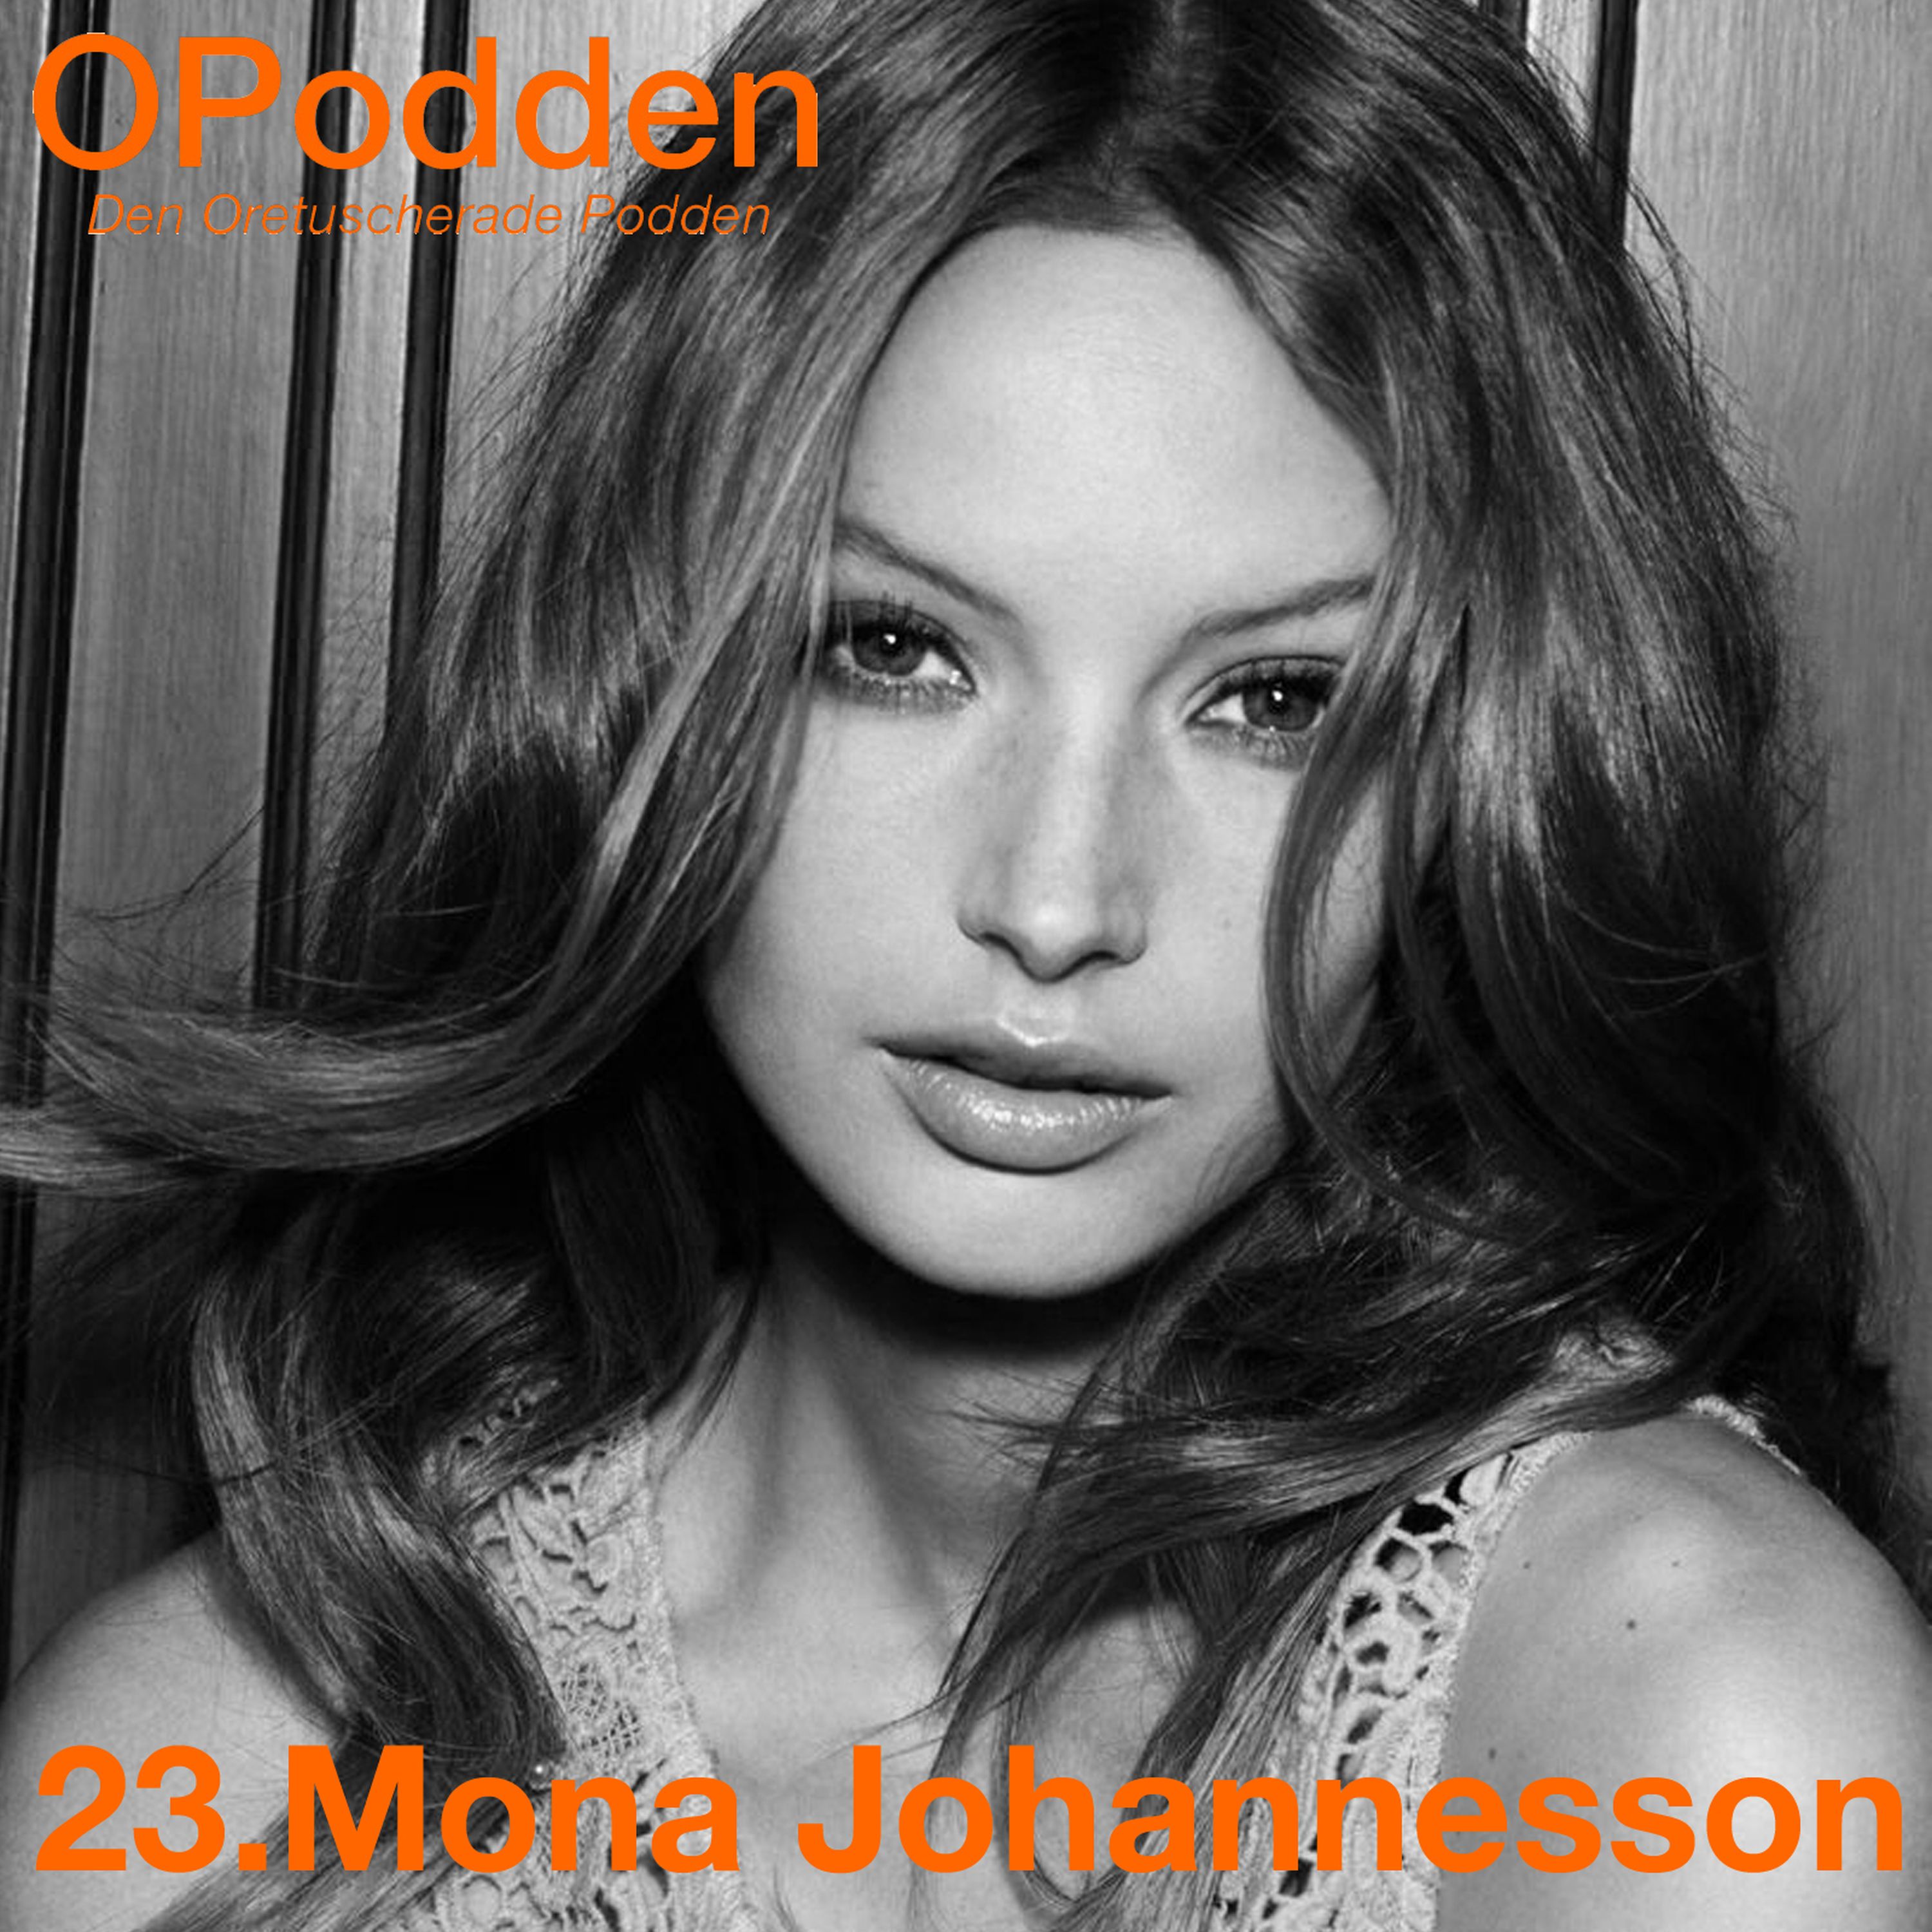 23.Mona Johannesson